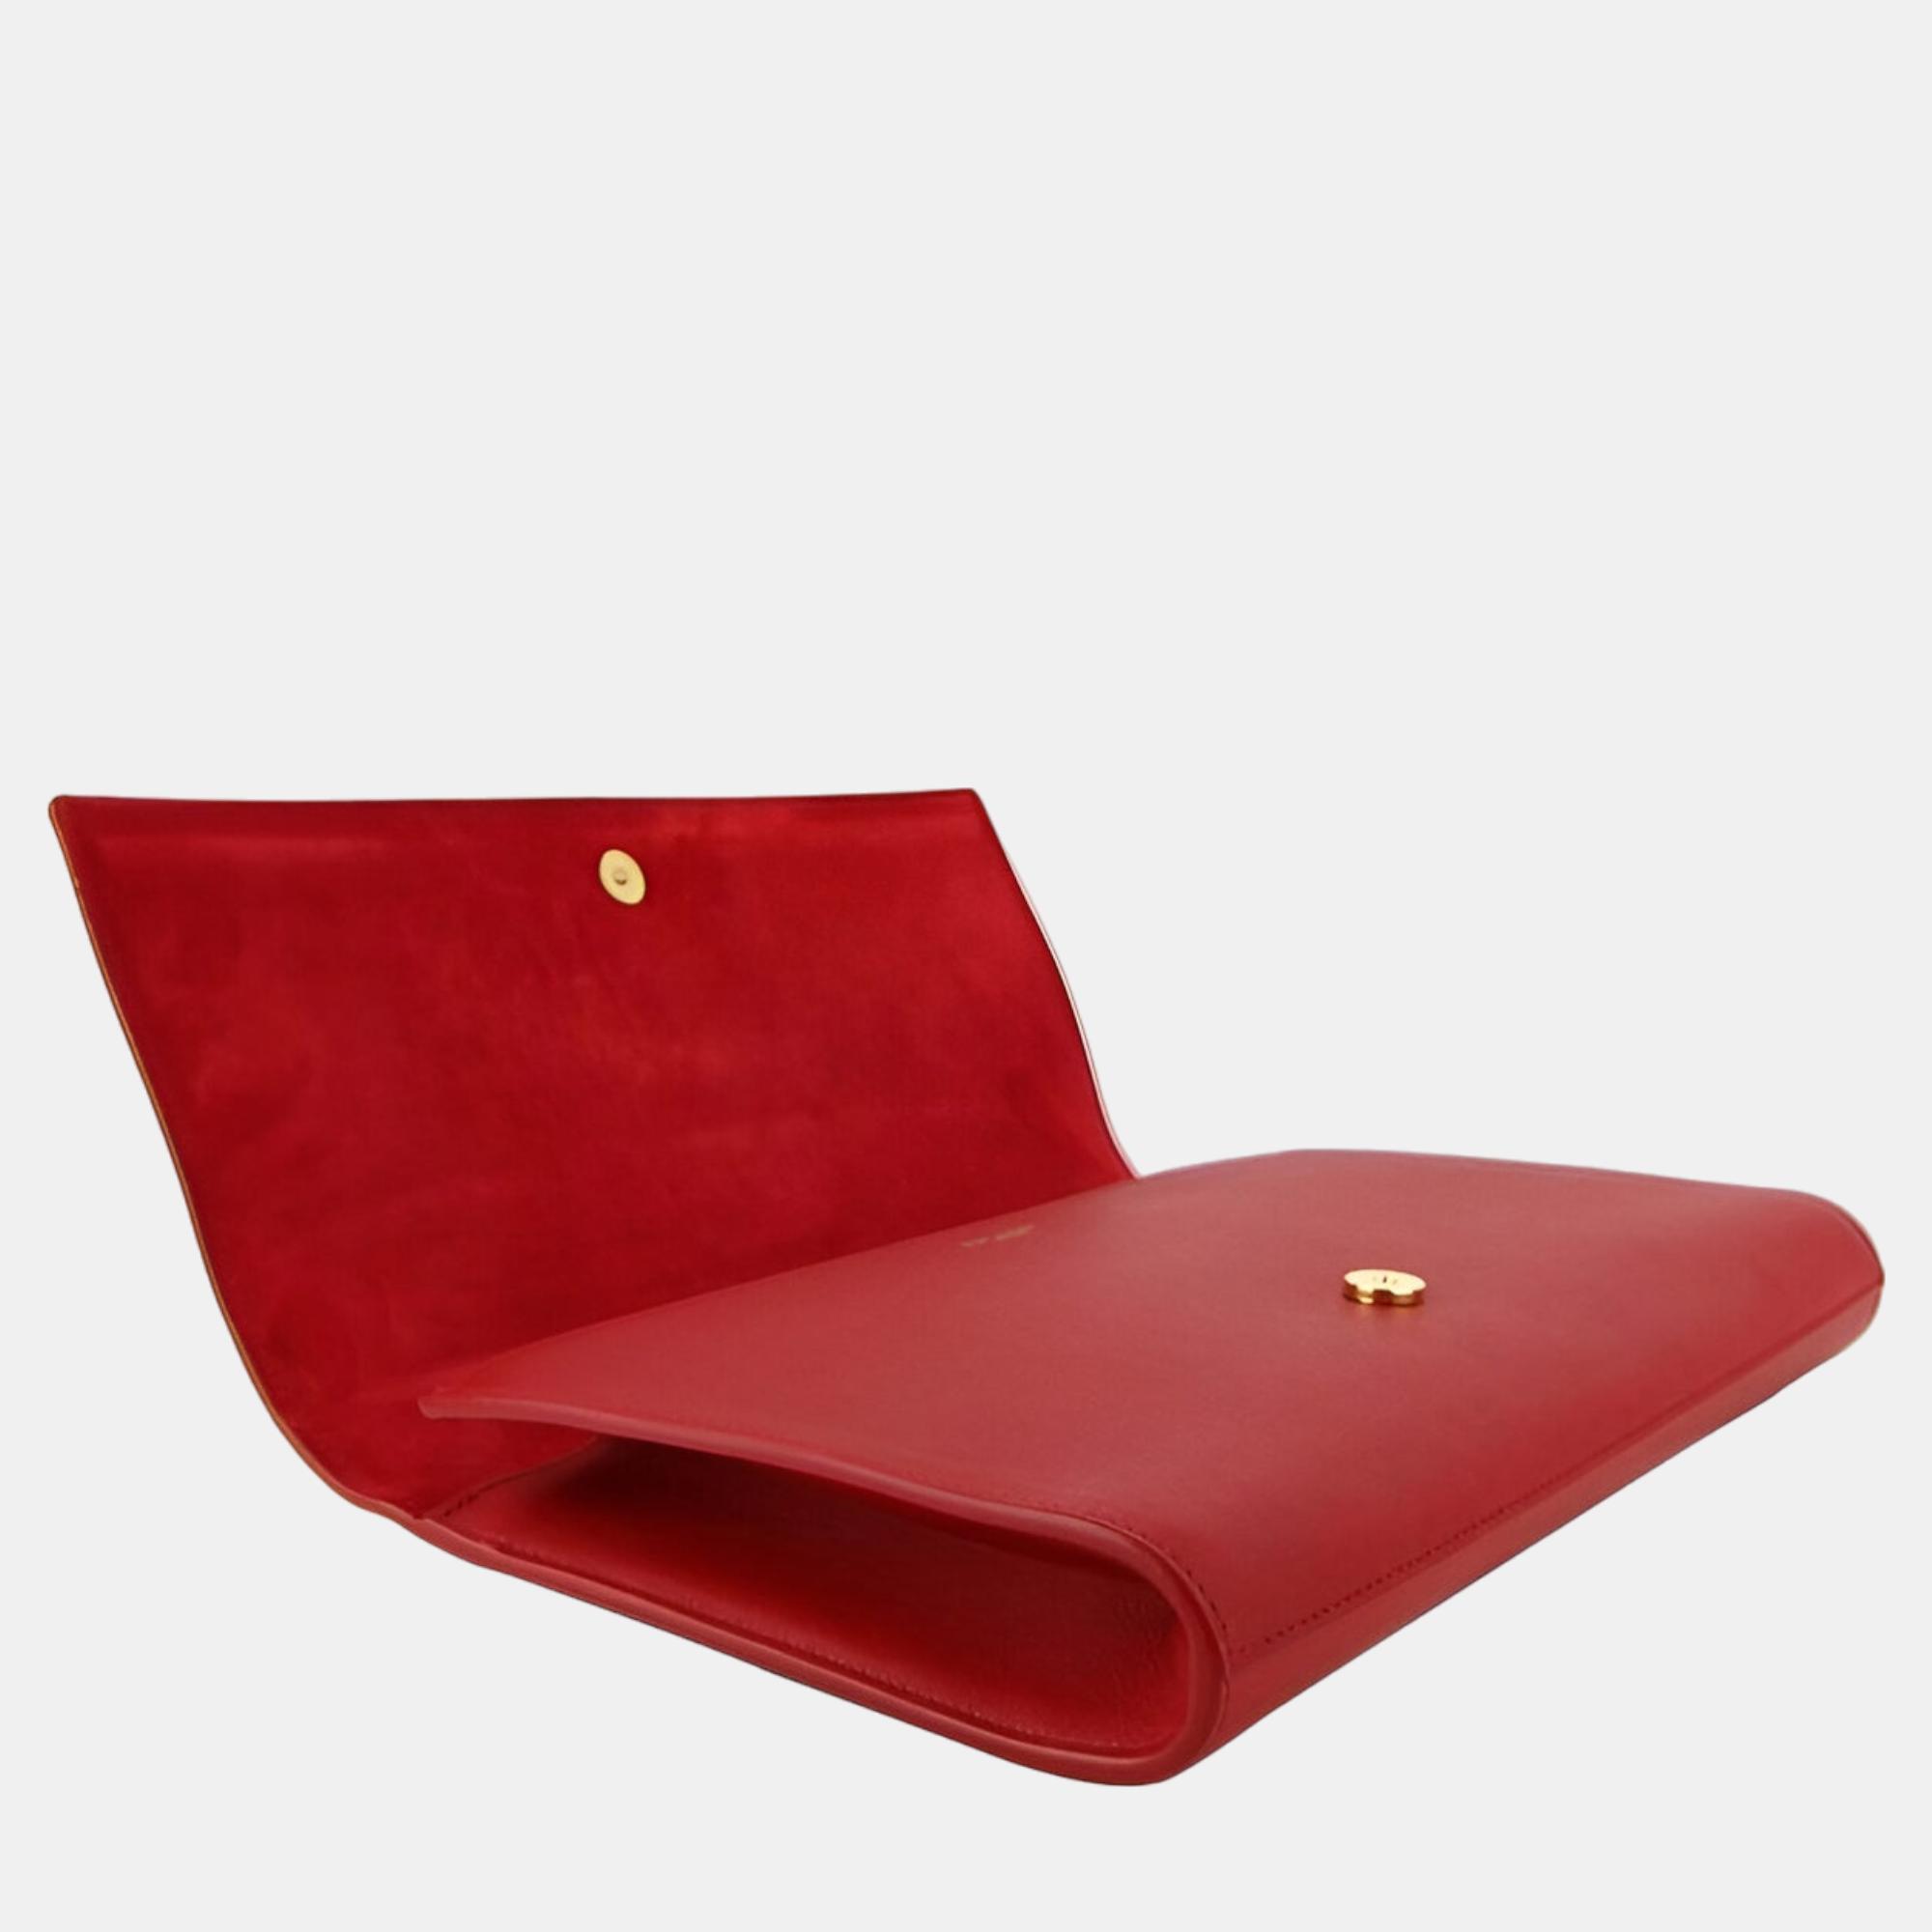 Saint Laurent Red Leather Clutch